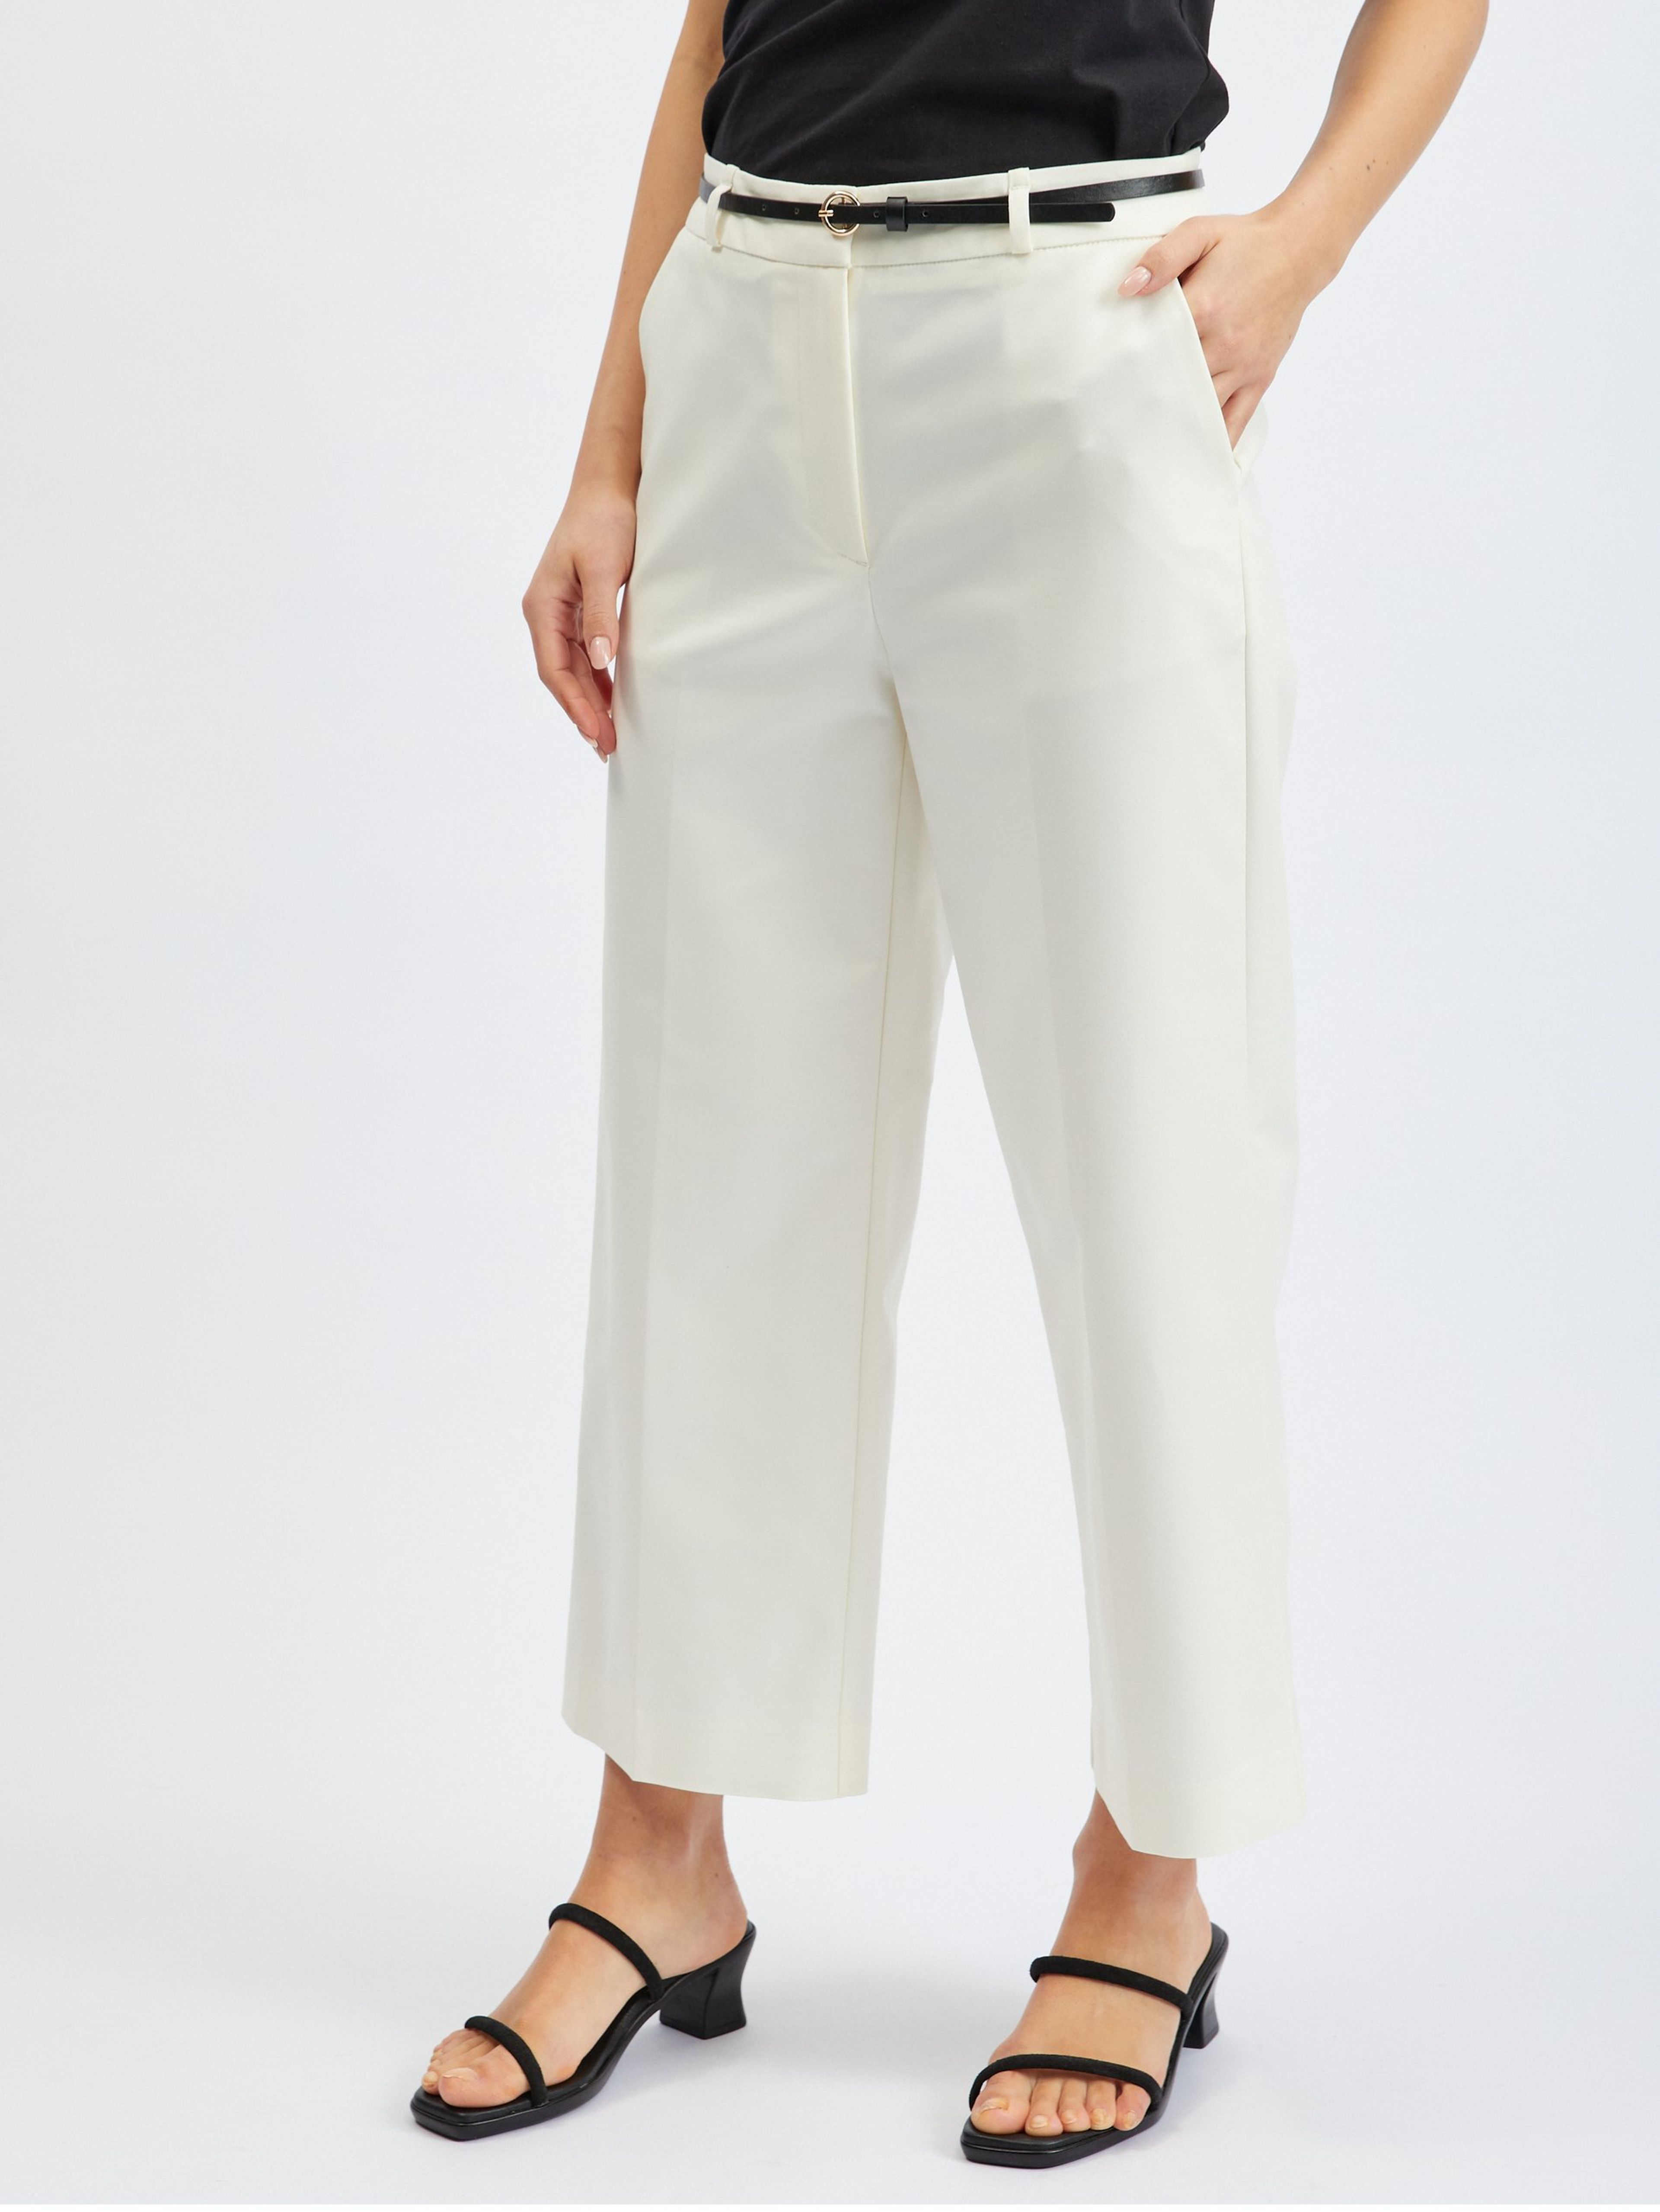 Białe spodnie damskie typu culottes ORSAY